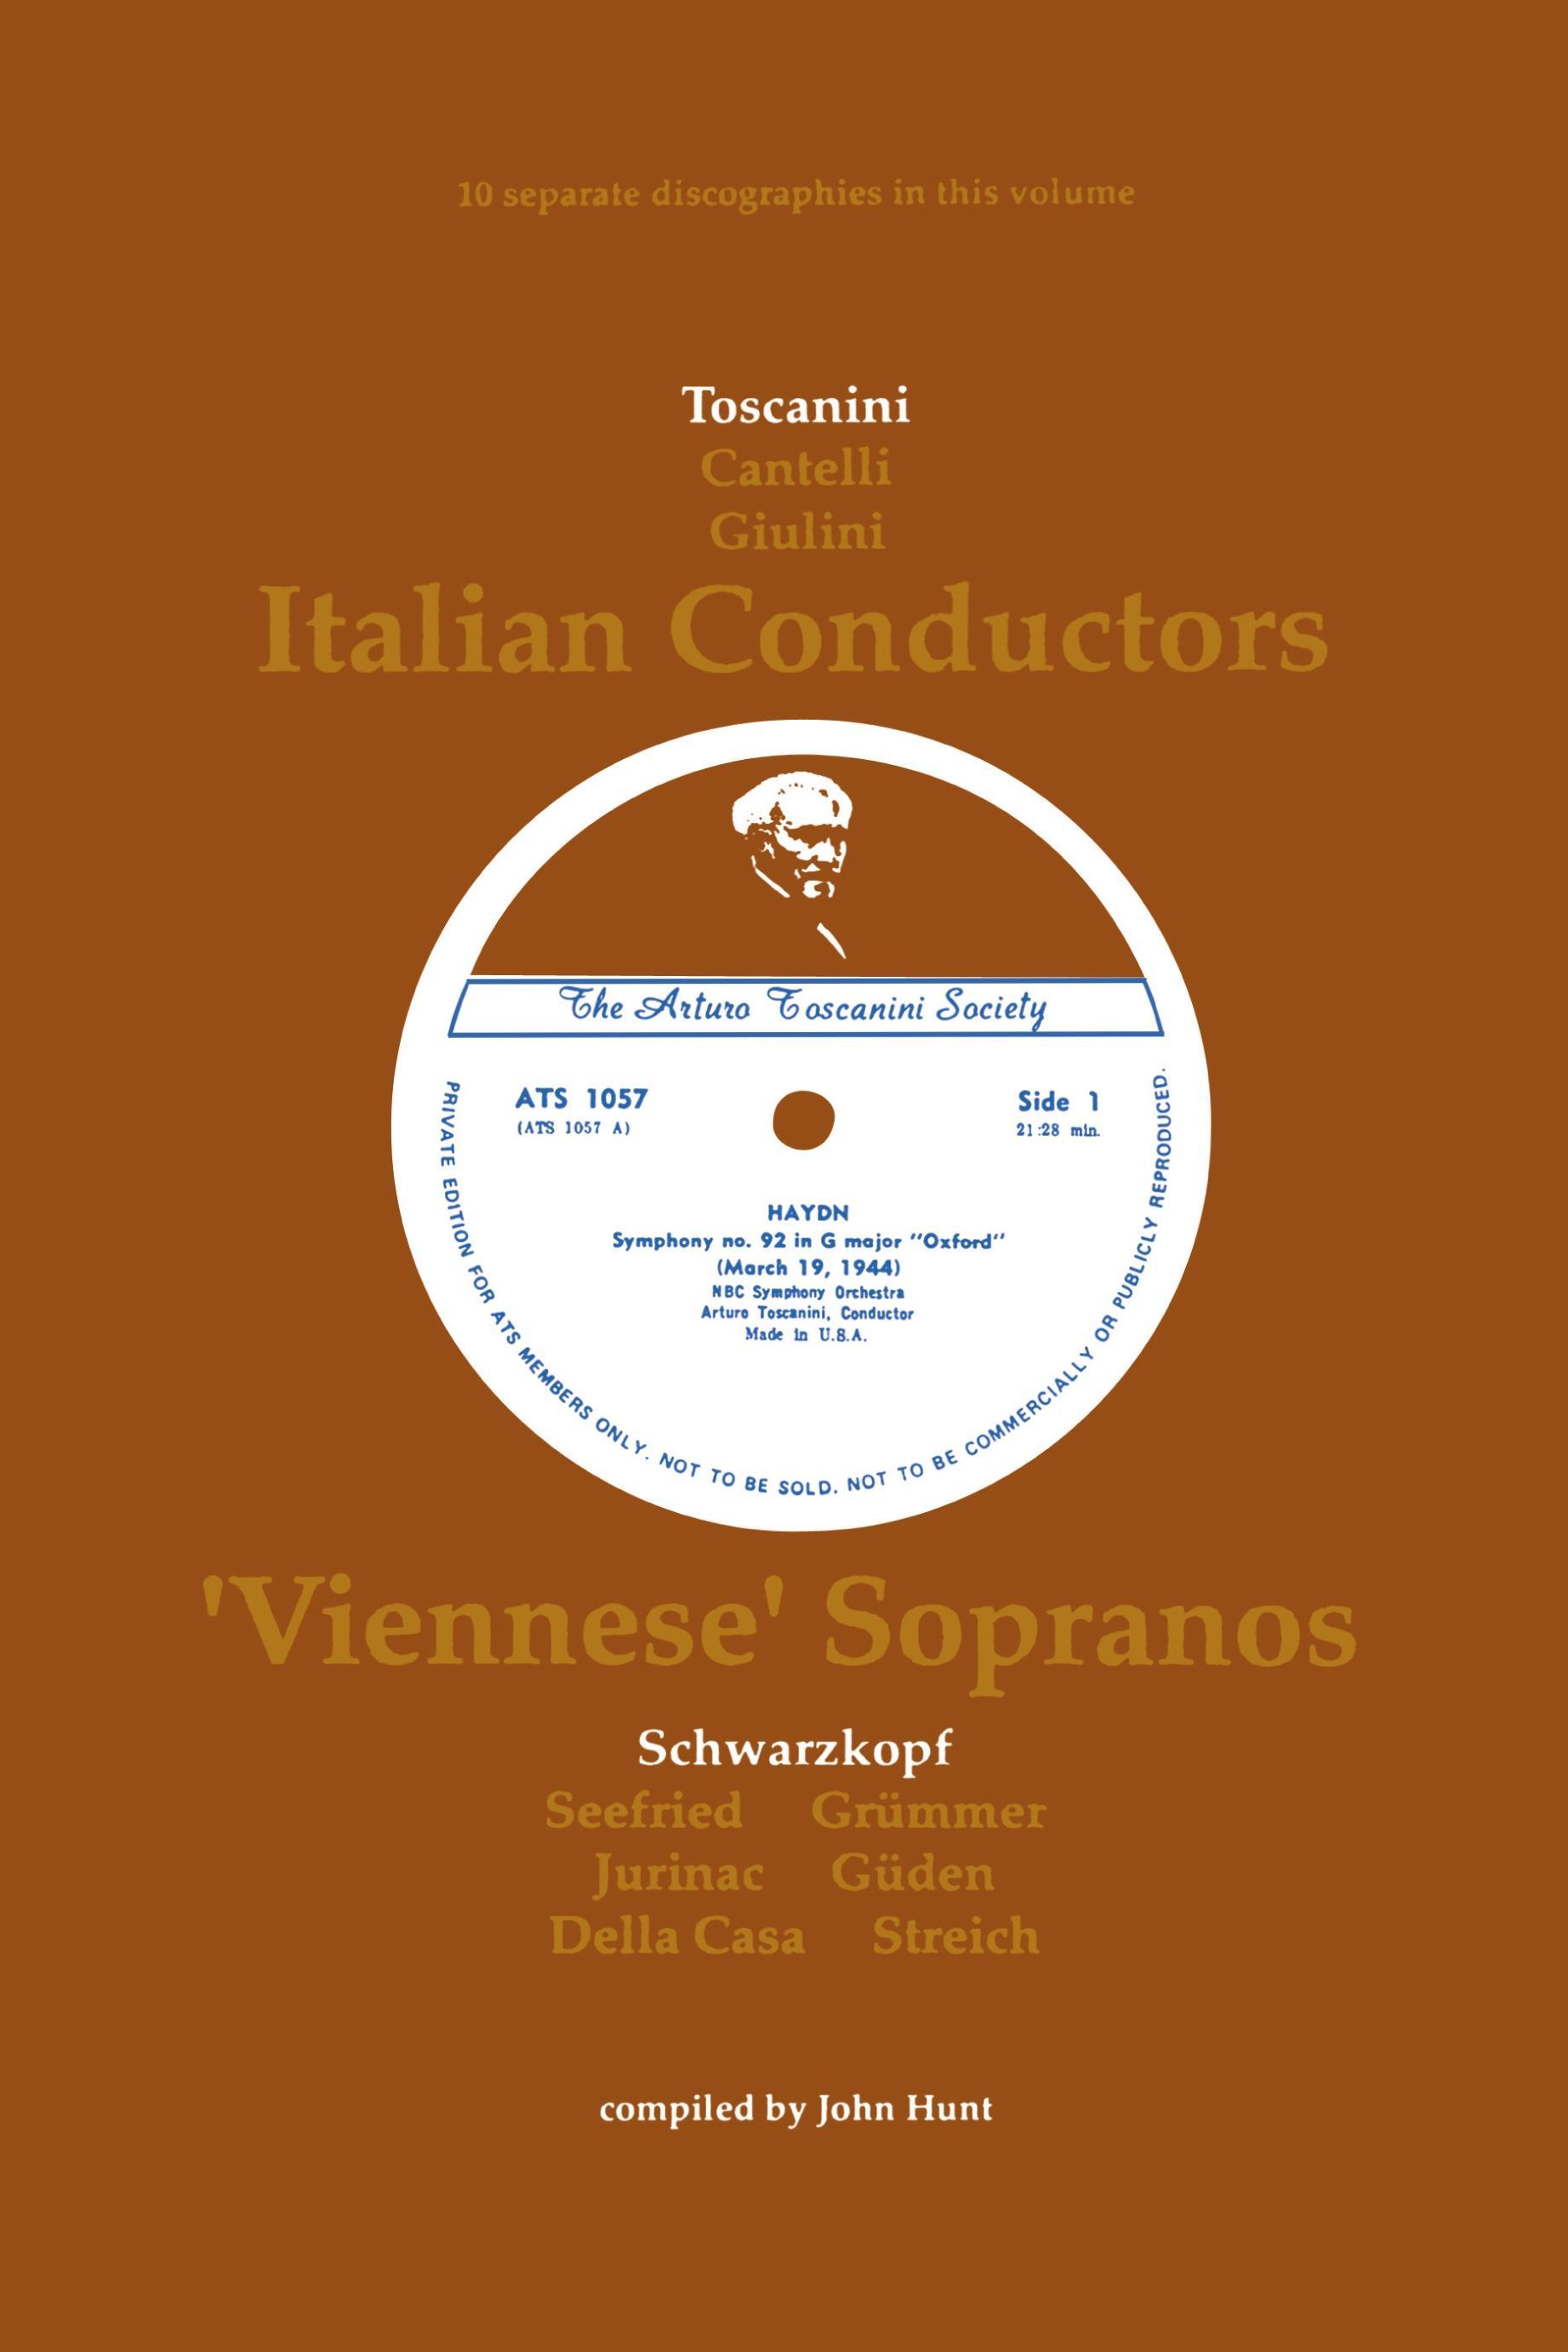 3 Italian Conductors and 7 Viennese Sopranos. 10 Discographies. Arturo Toscanini, Guido Cantelli, Carlo Maria Giulini, Elisabeth Schwarzkopf, Irmgard - Hunt, John